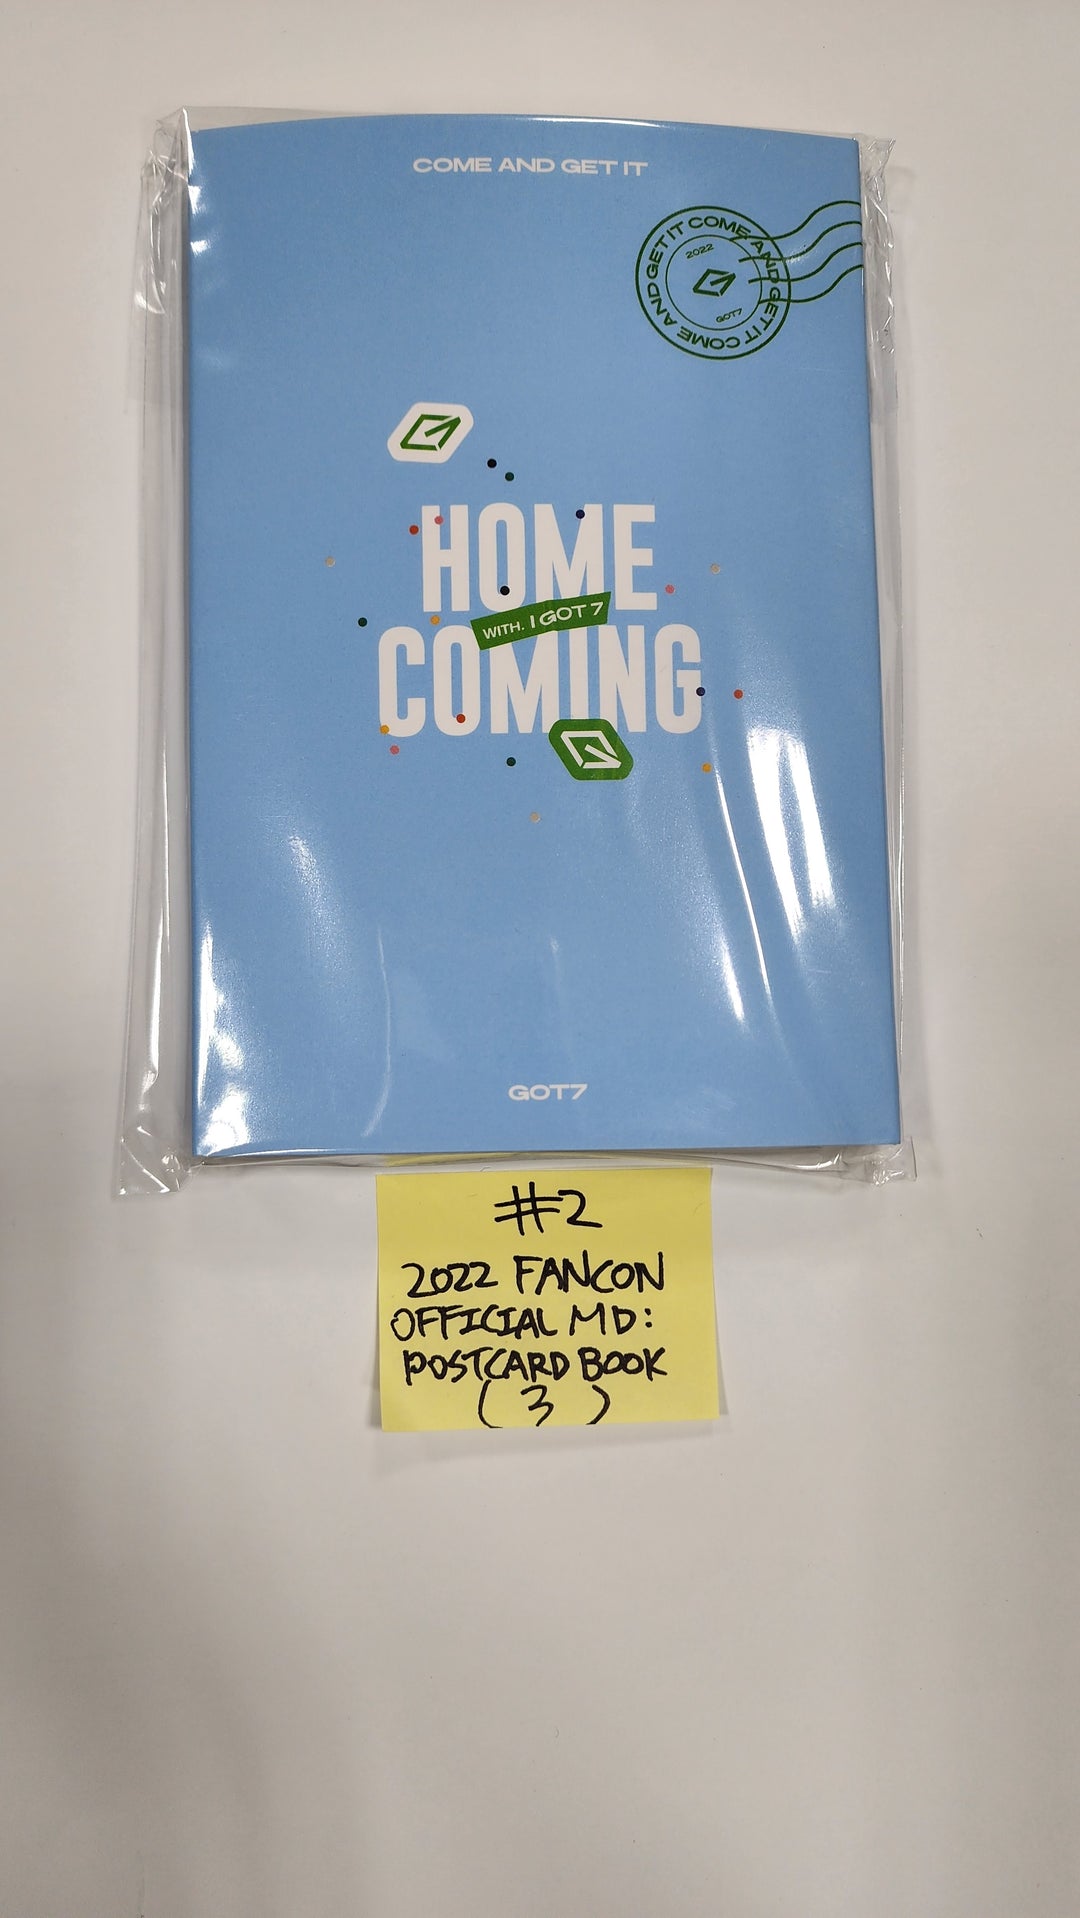 GOT7 2022 FANCON - Official MD [포토카드 세트, 엽서북]